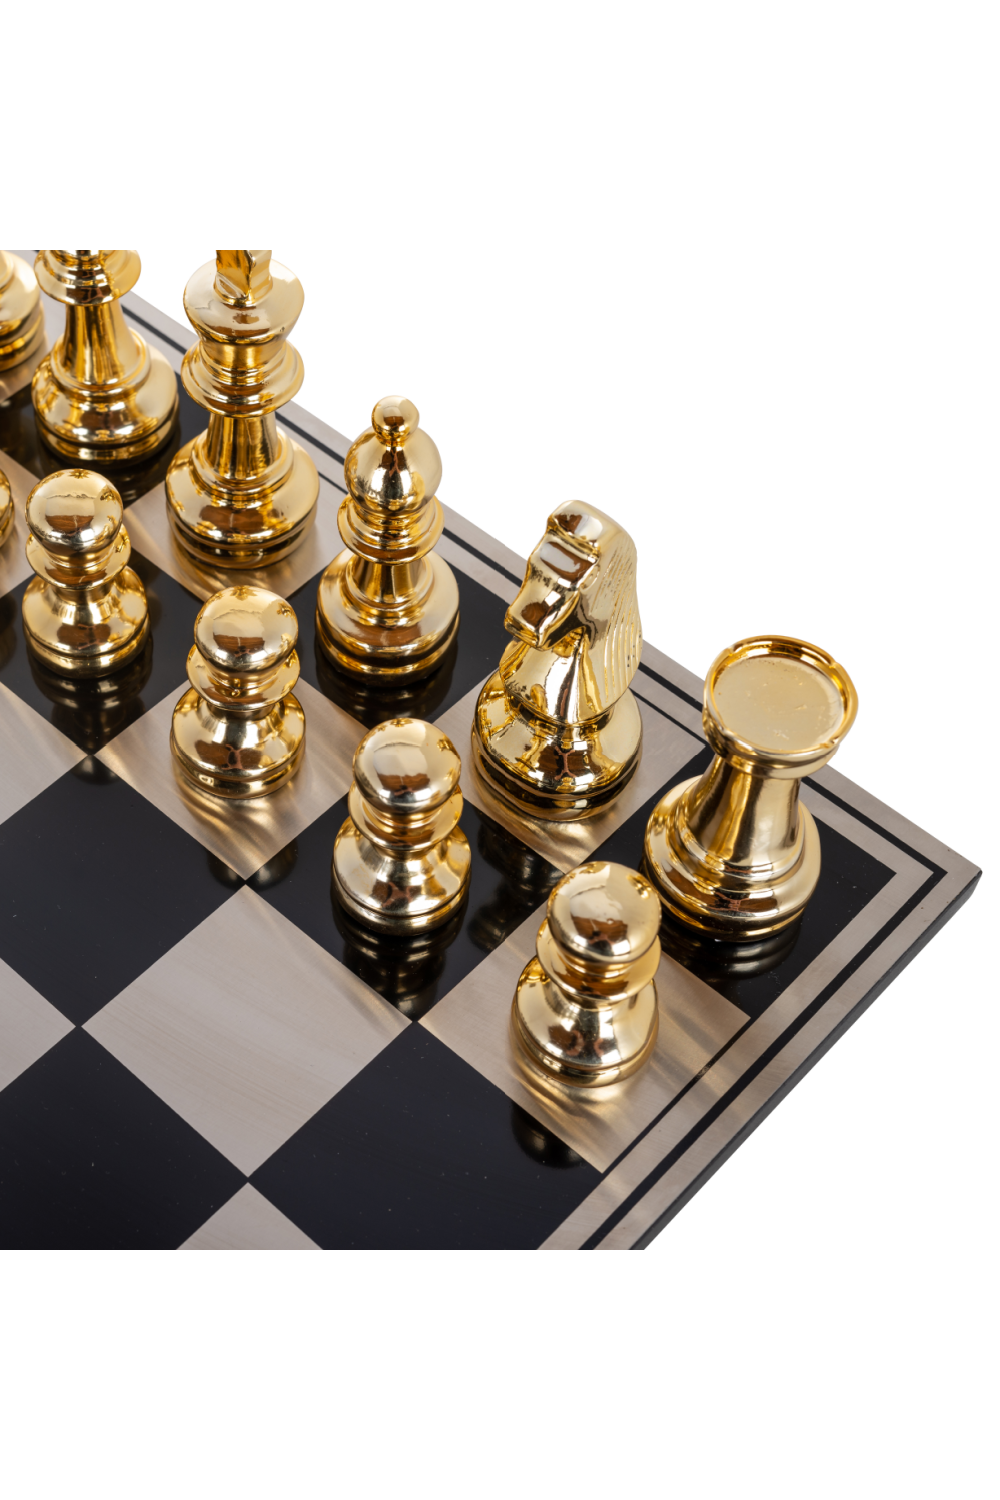 Modern Classic Chessboard | OROA Saray | OROA.com